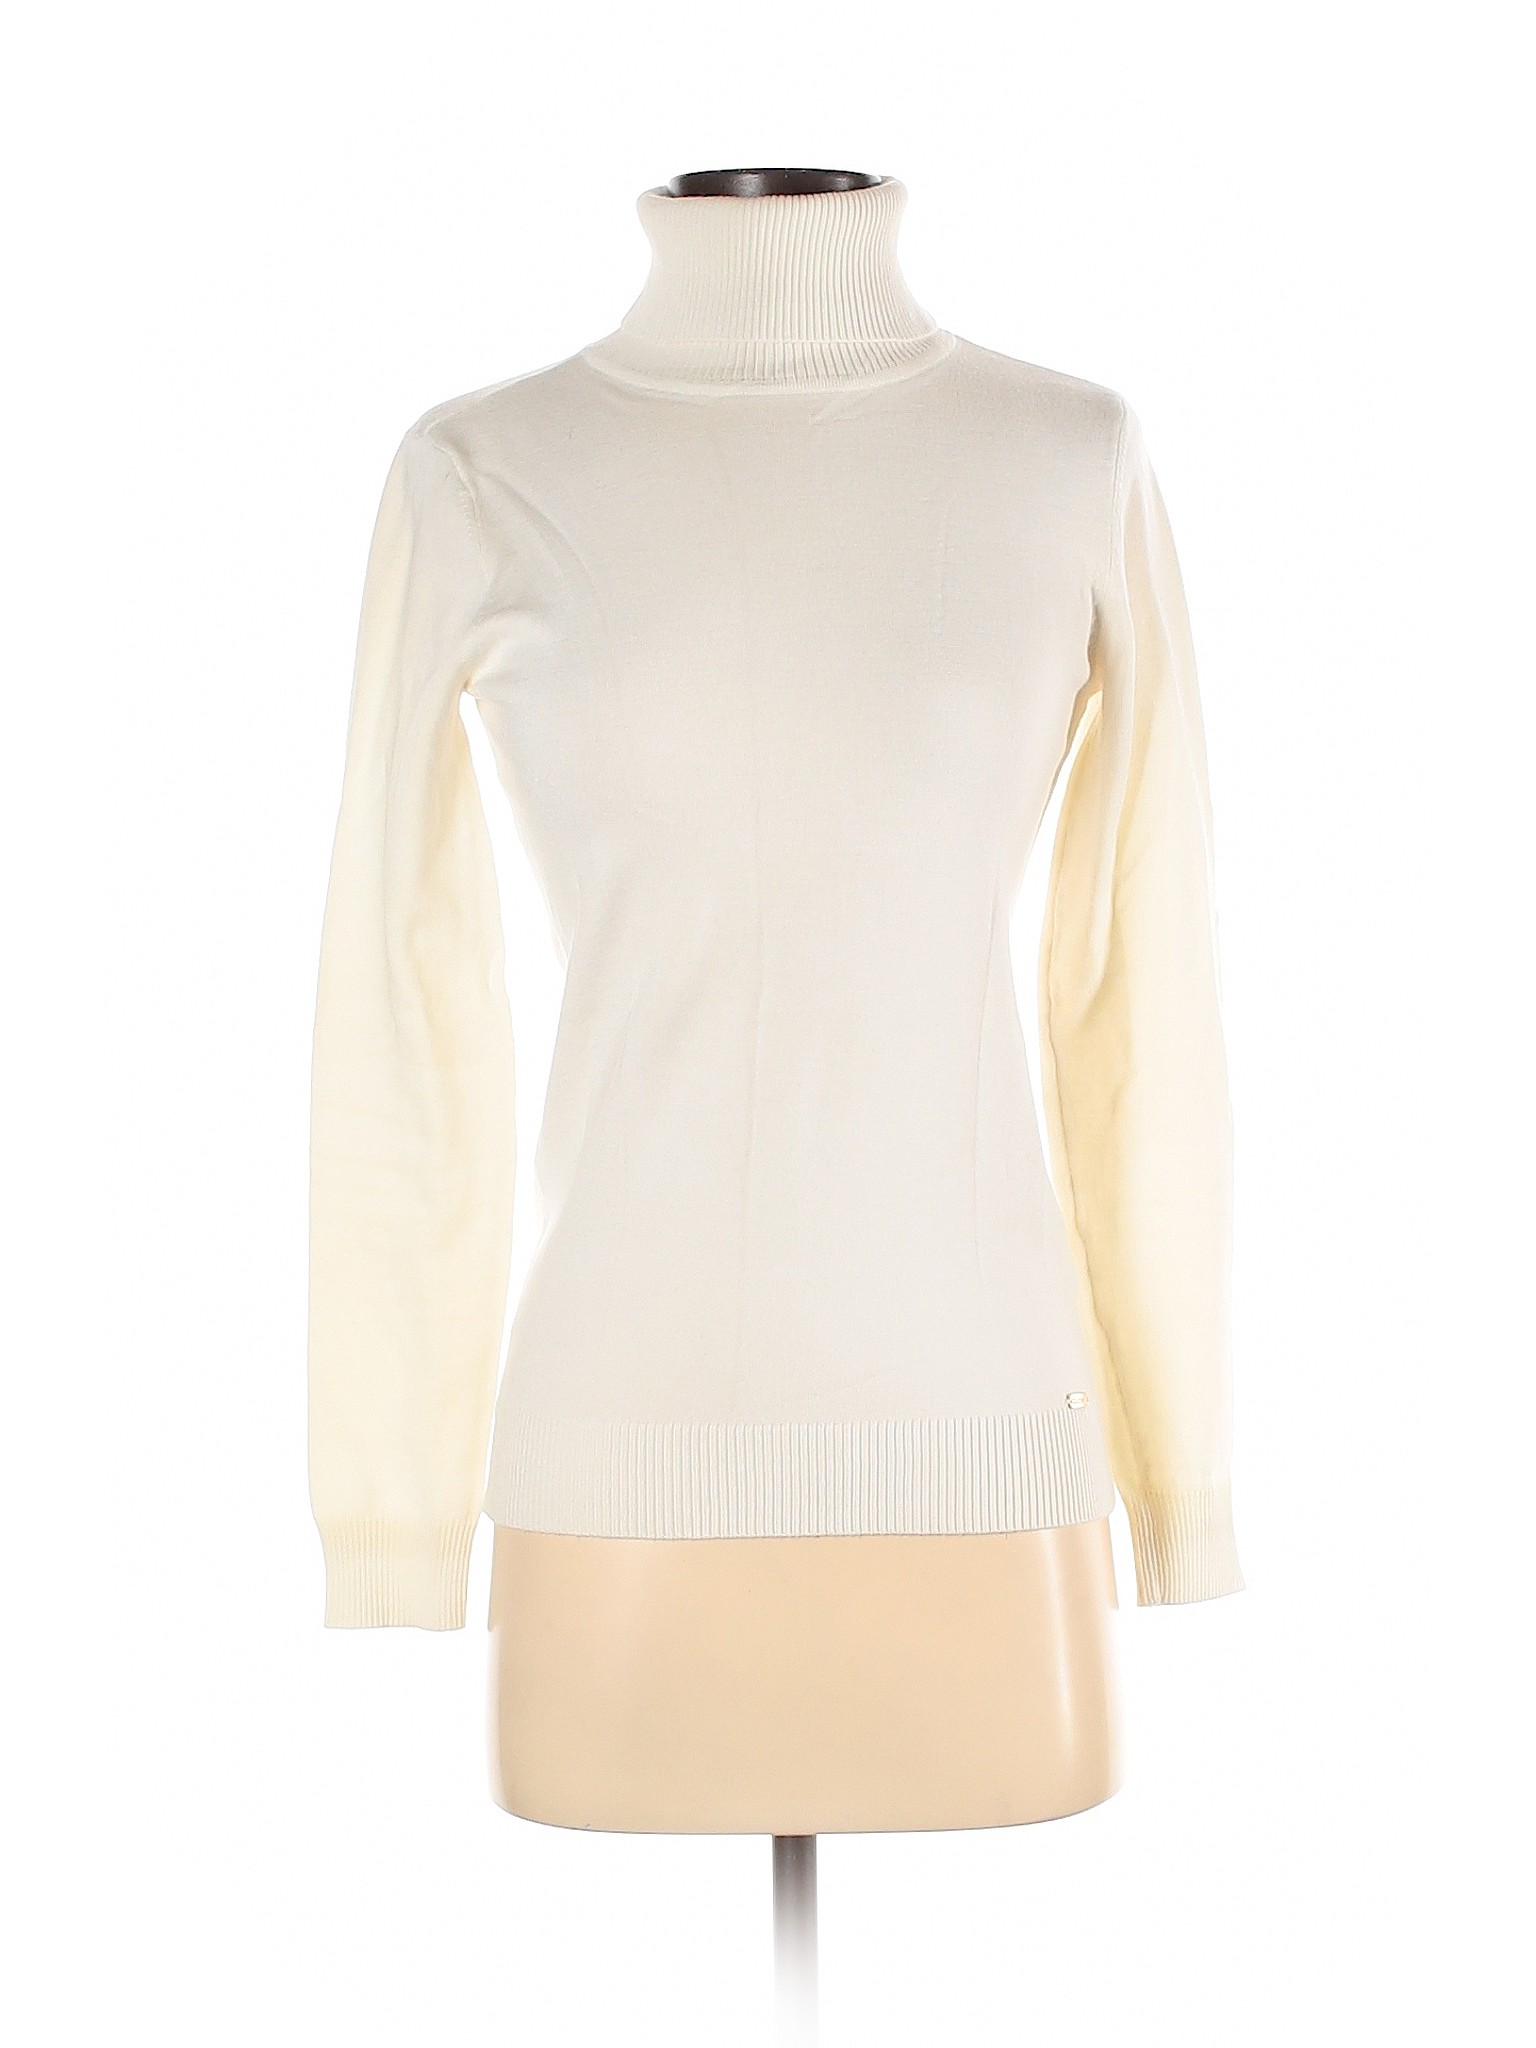 Calvin Klein Women Ivory Turtleneck Sweater XS | eBay